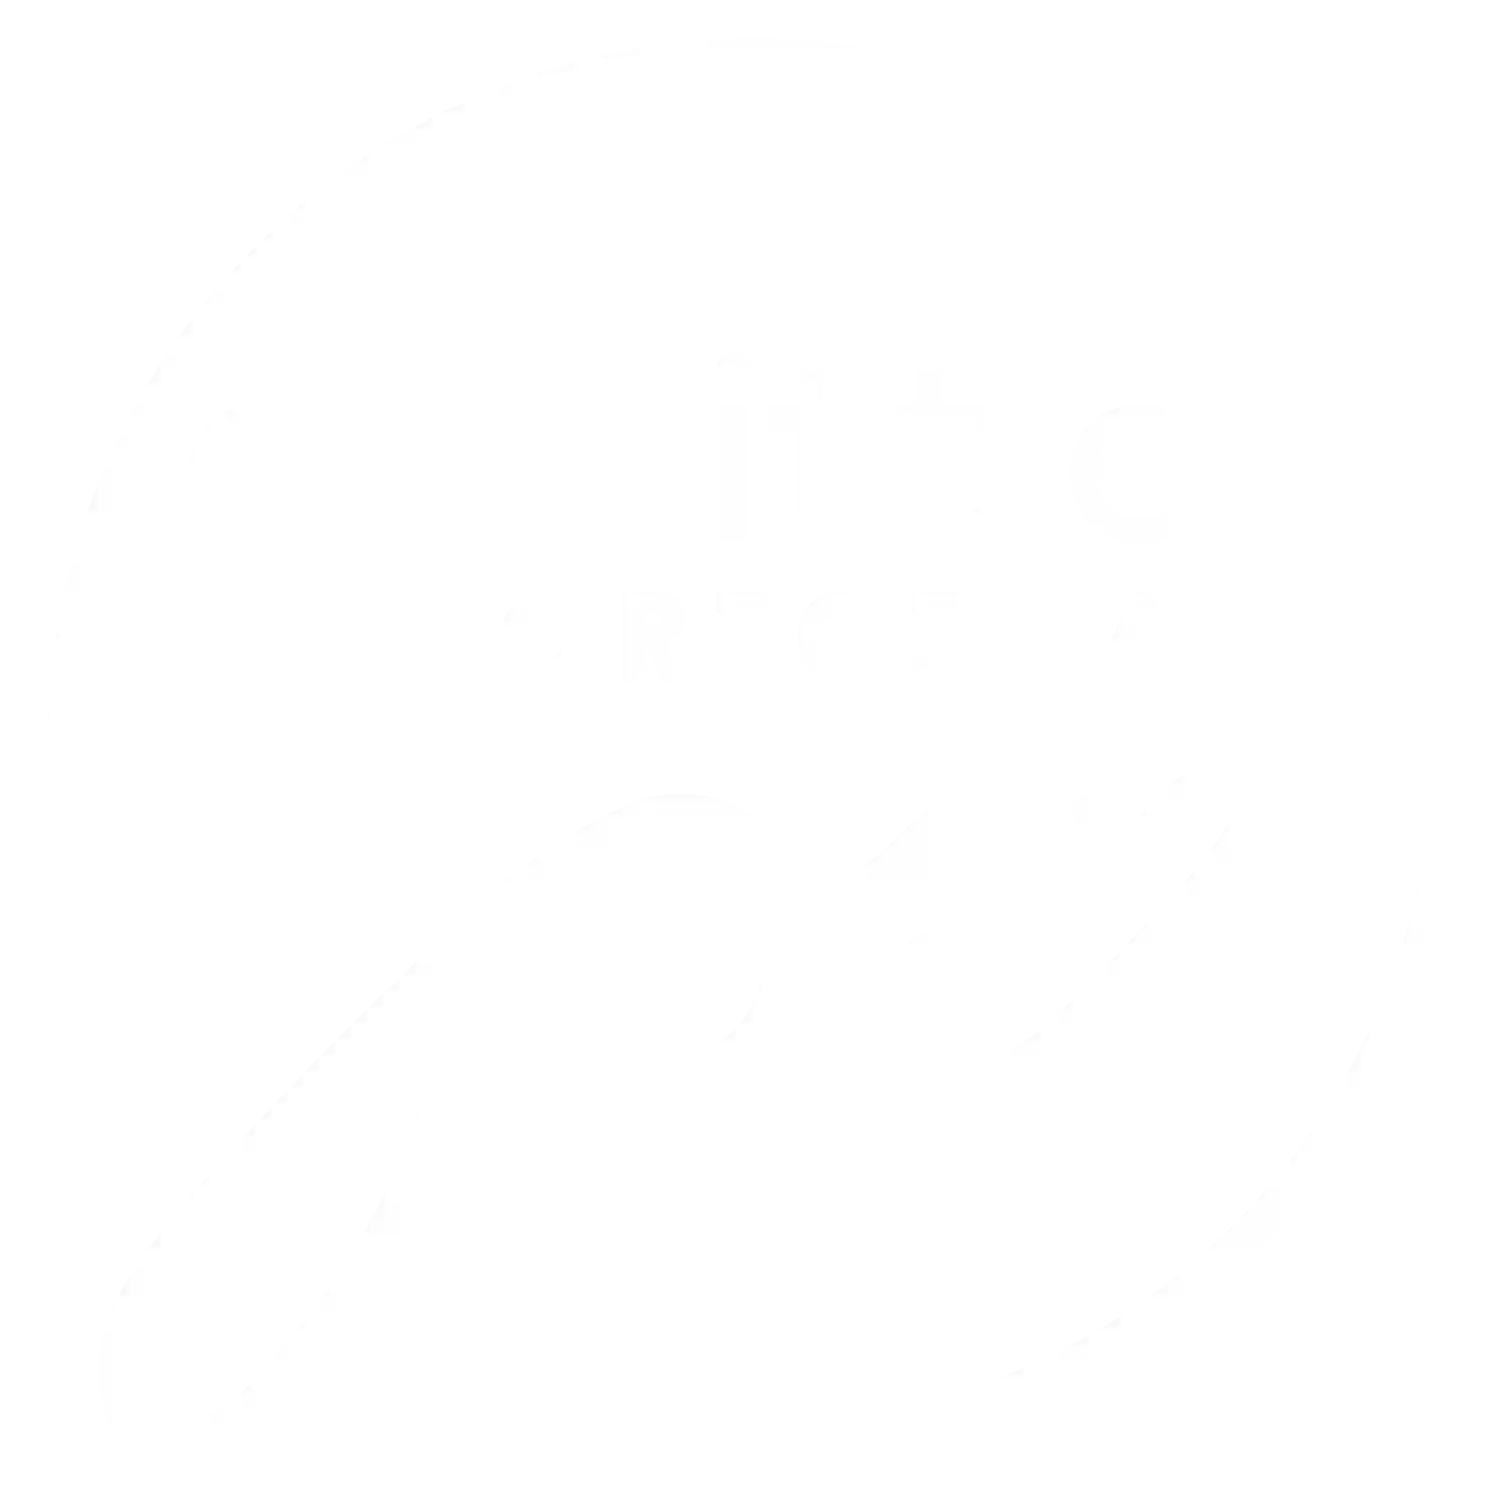 Little Original Joe's